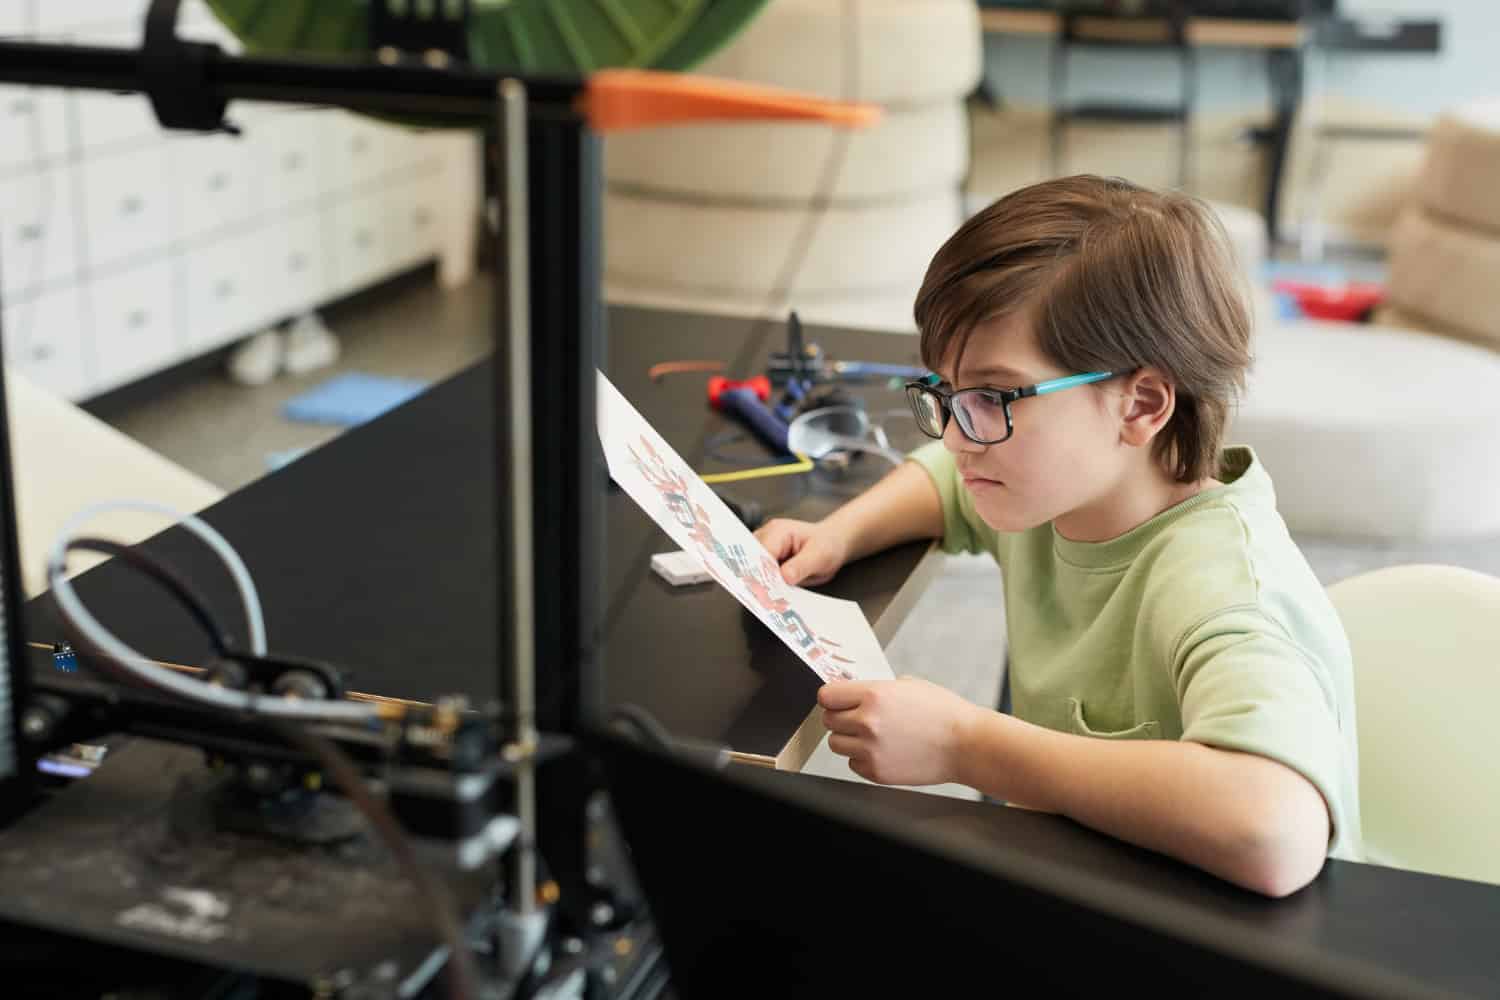 school boy using a 3d printer at school